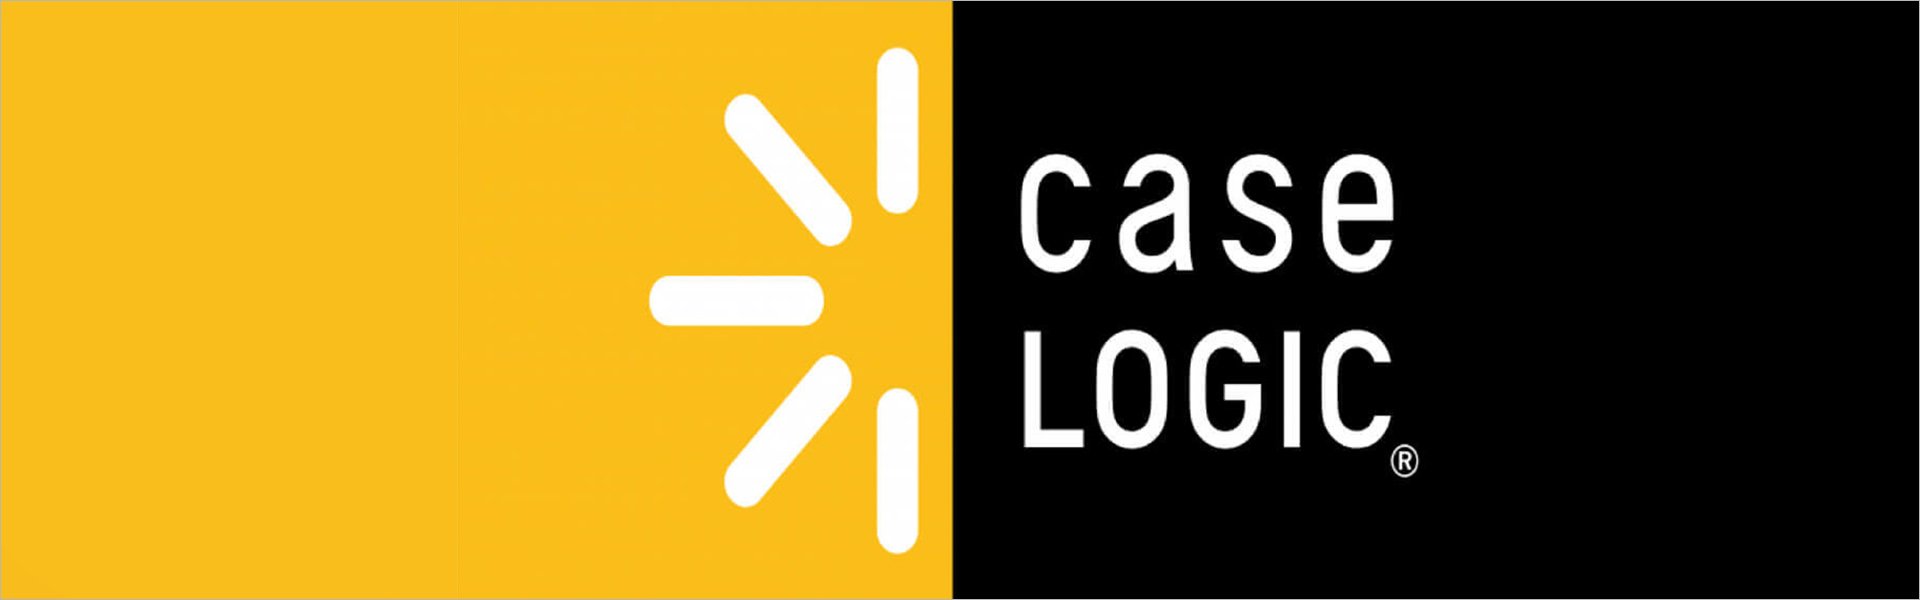 Case Logic VNCI217 Fits up to size 17.3 Case logic